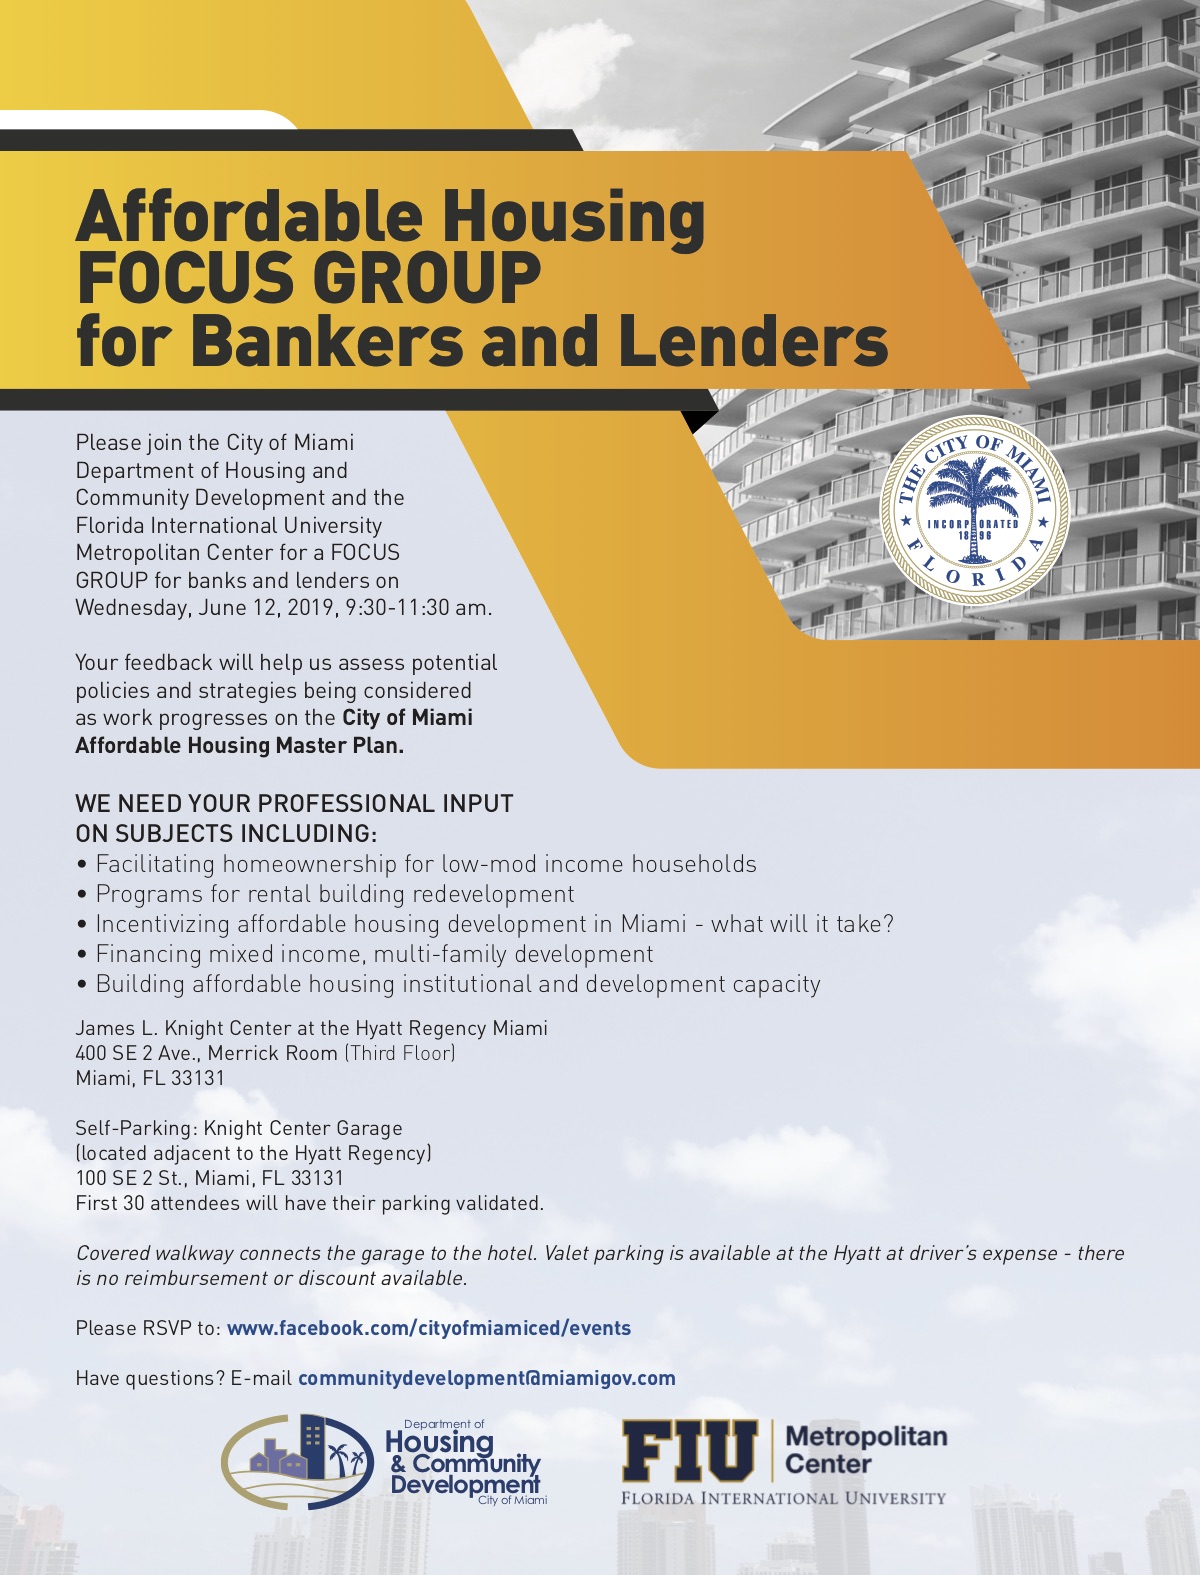 Affordable Housing Focus Group for Bankers - Lenders.jpg